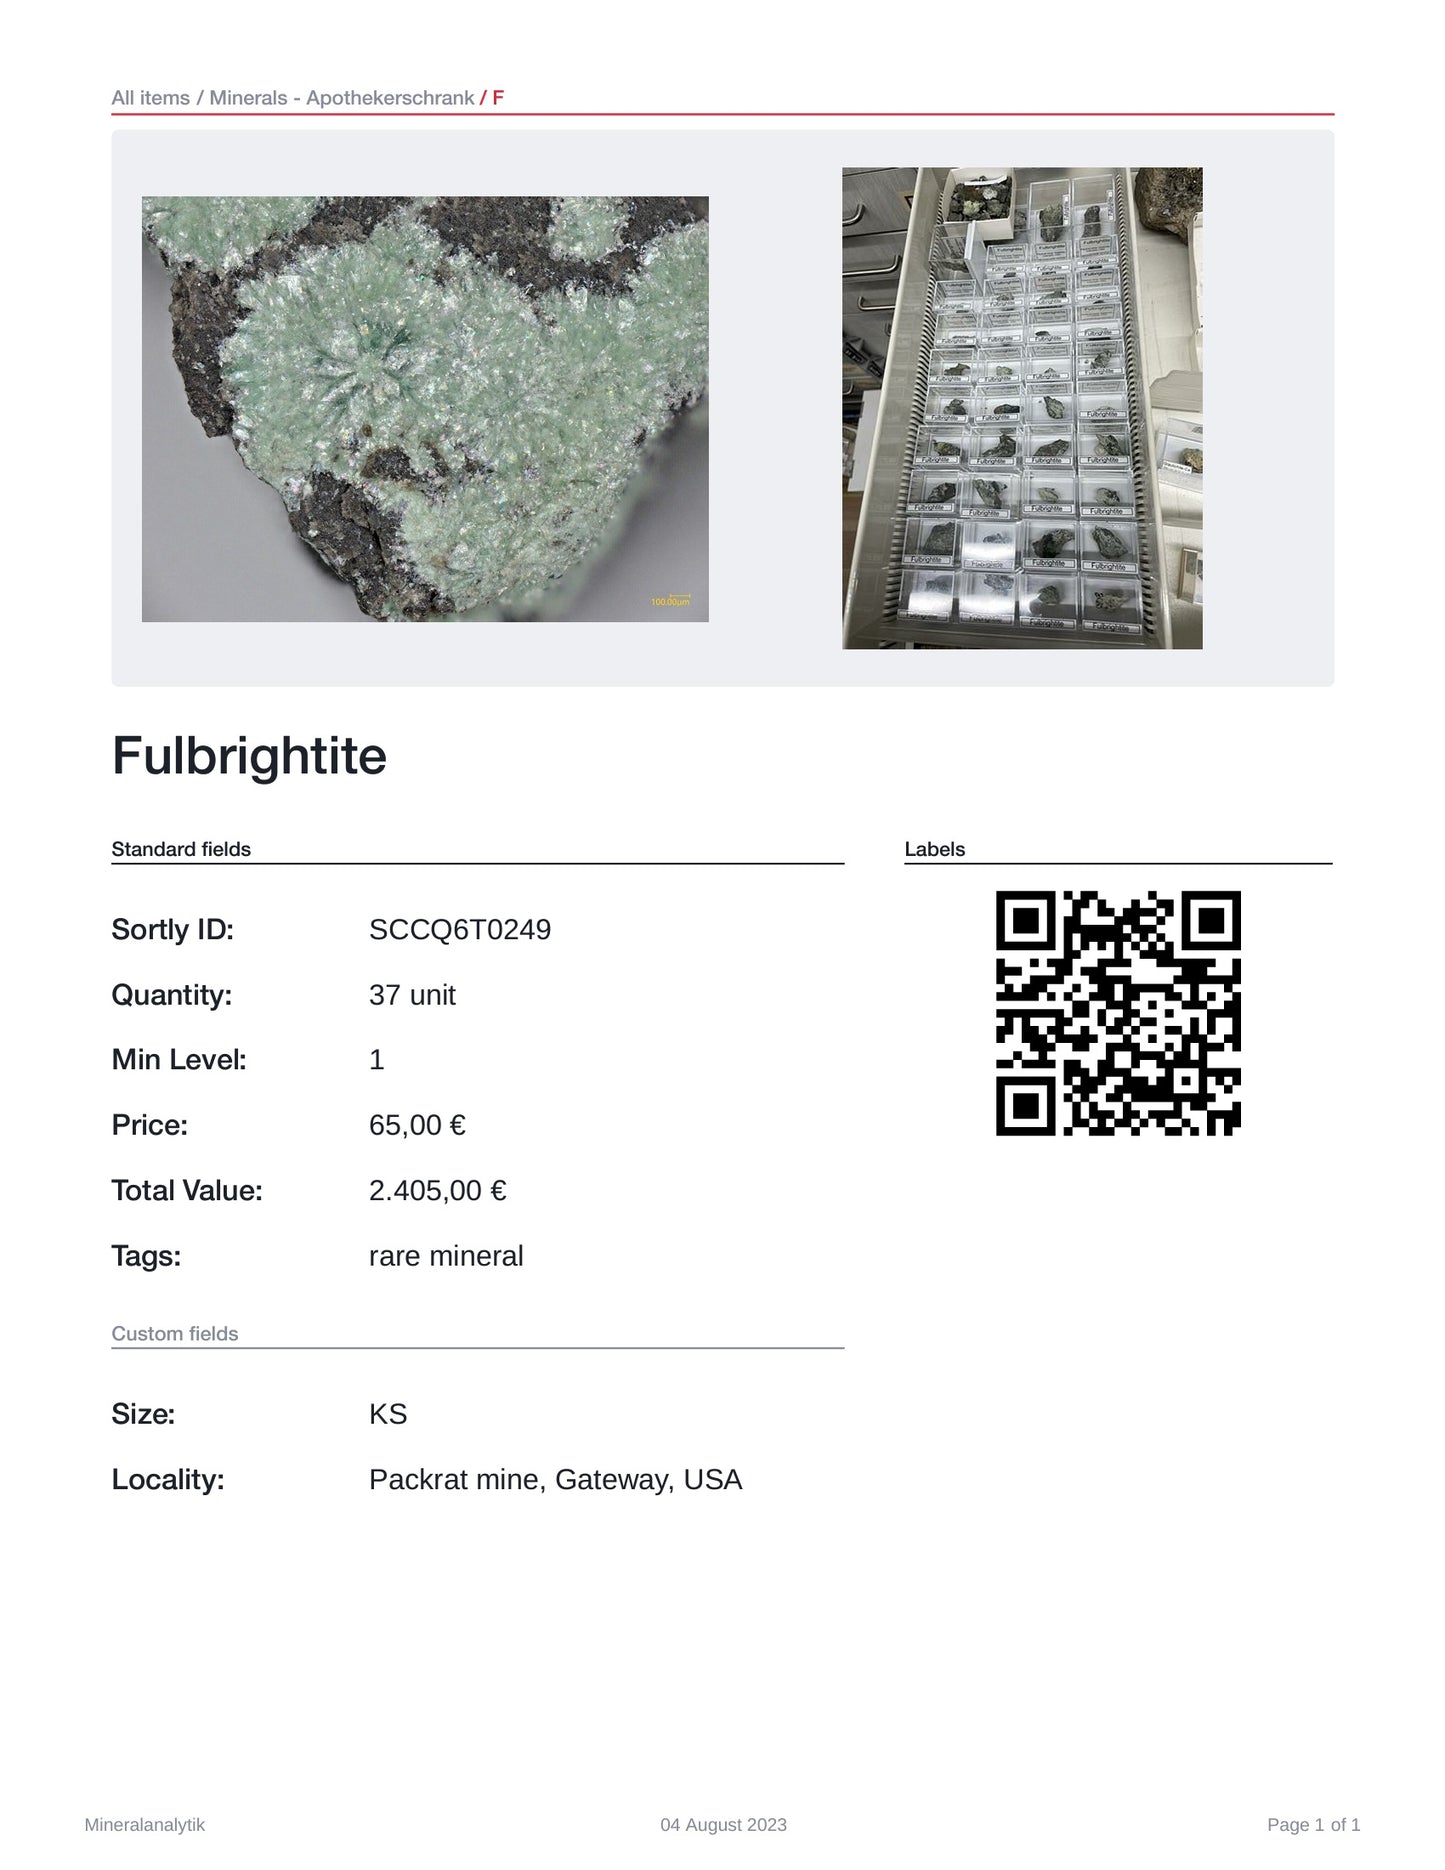 Fulbrightite